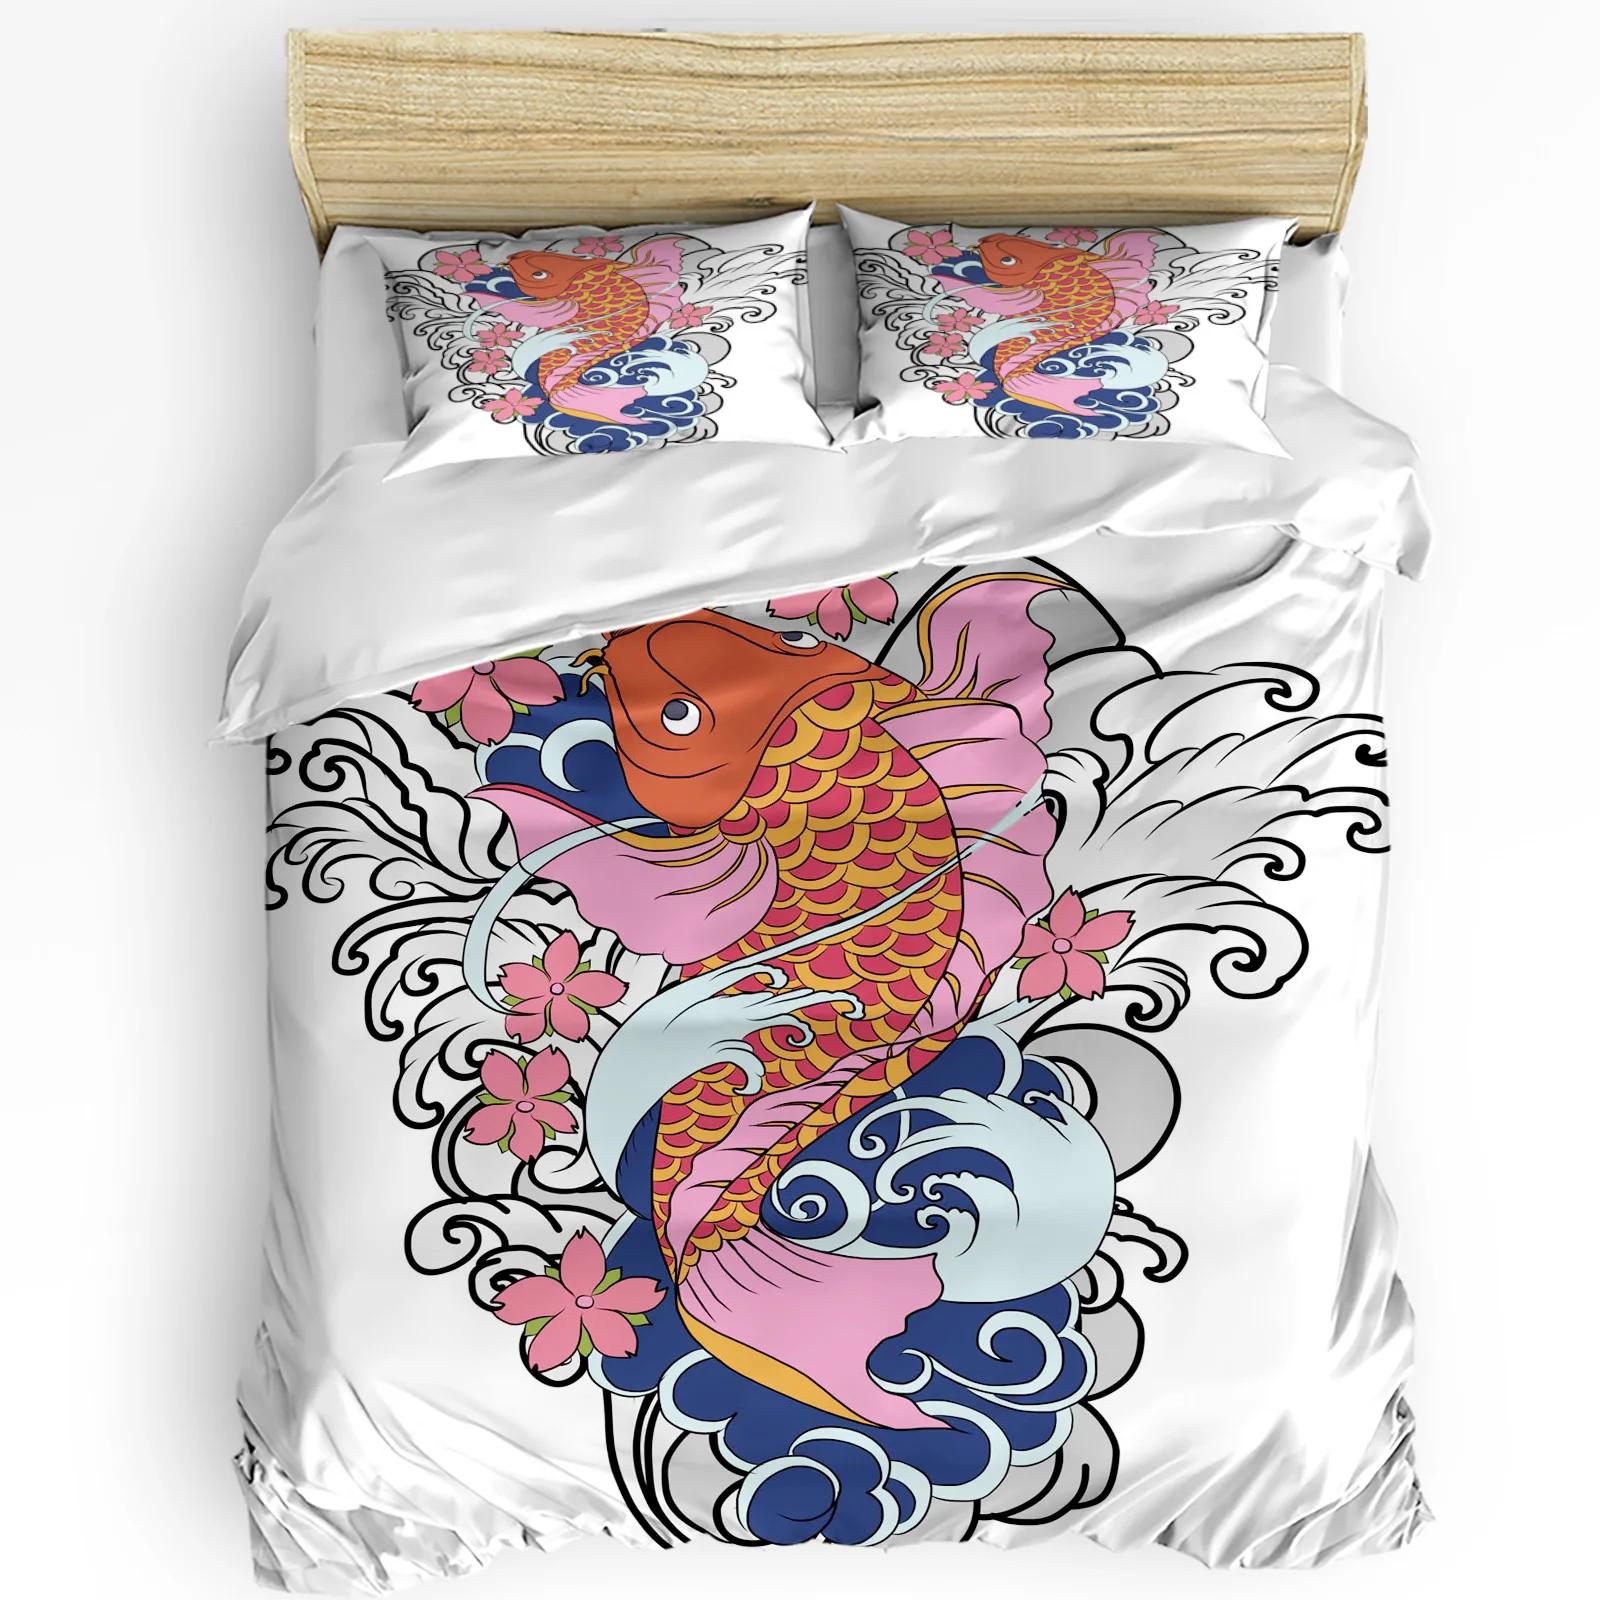 Koi Flowers Water Waves Carp Bedding Set 3pcs Duvet Cover Pillowcase Kids Adult Quilt Cover Double Bed Set Home Text